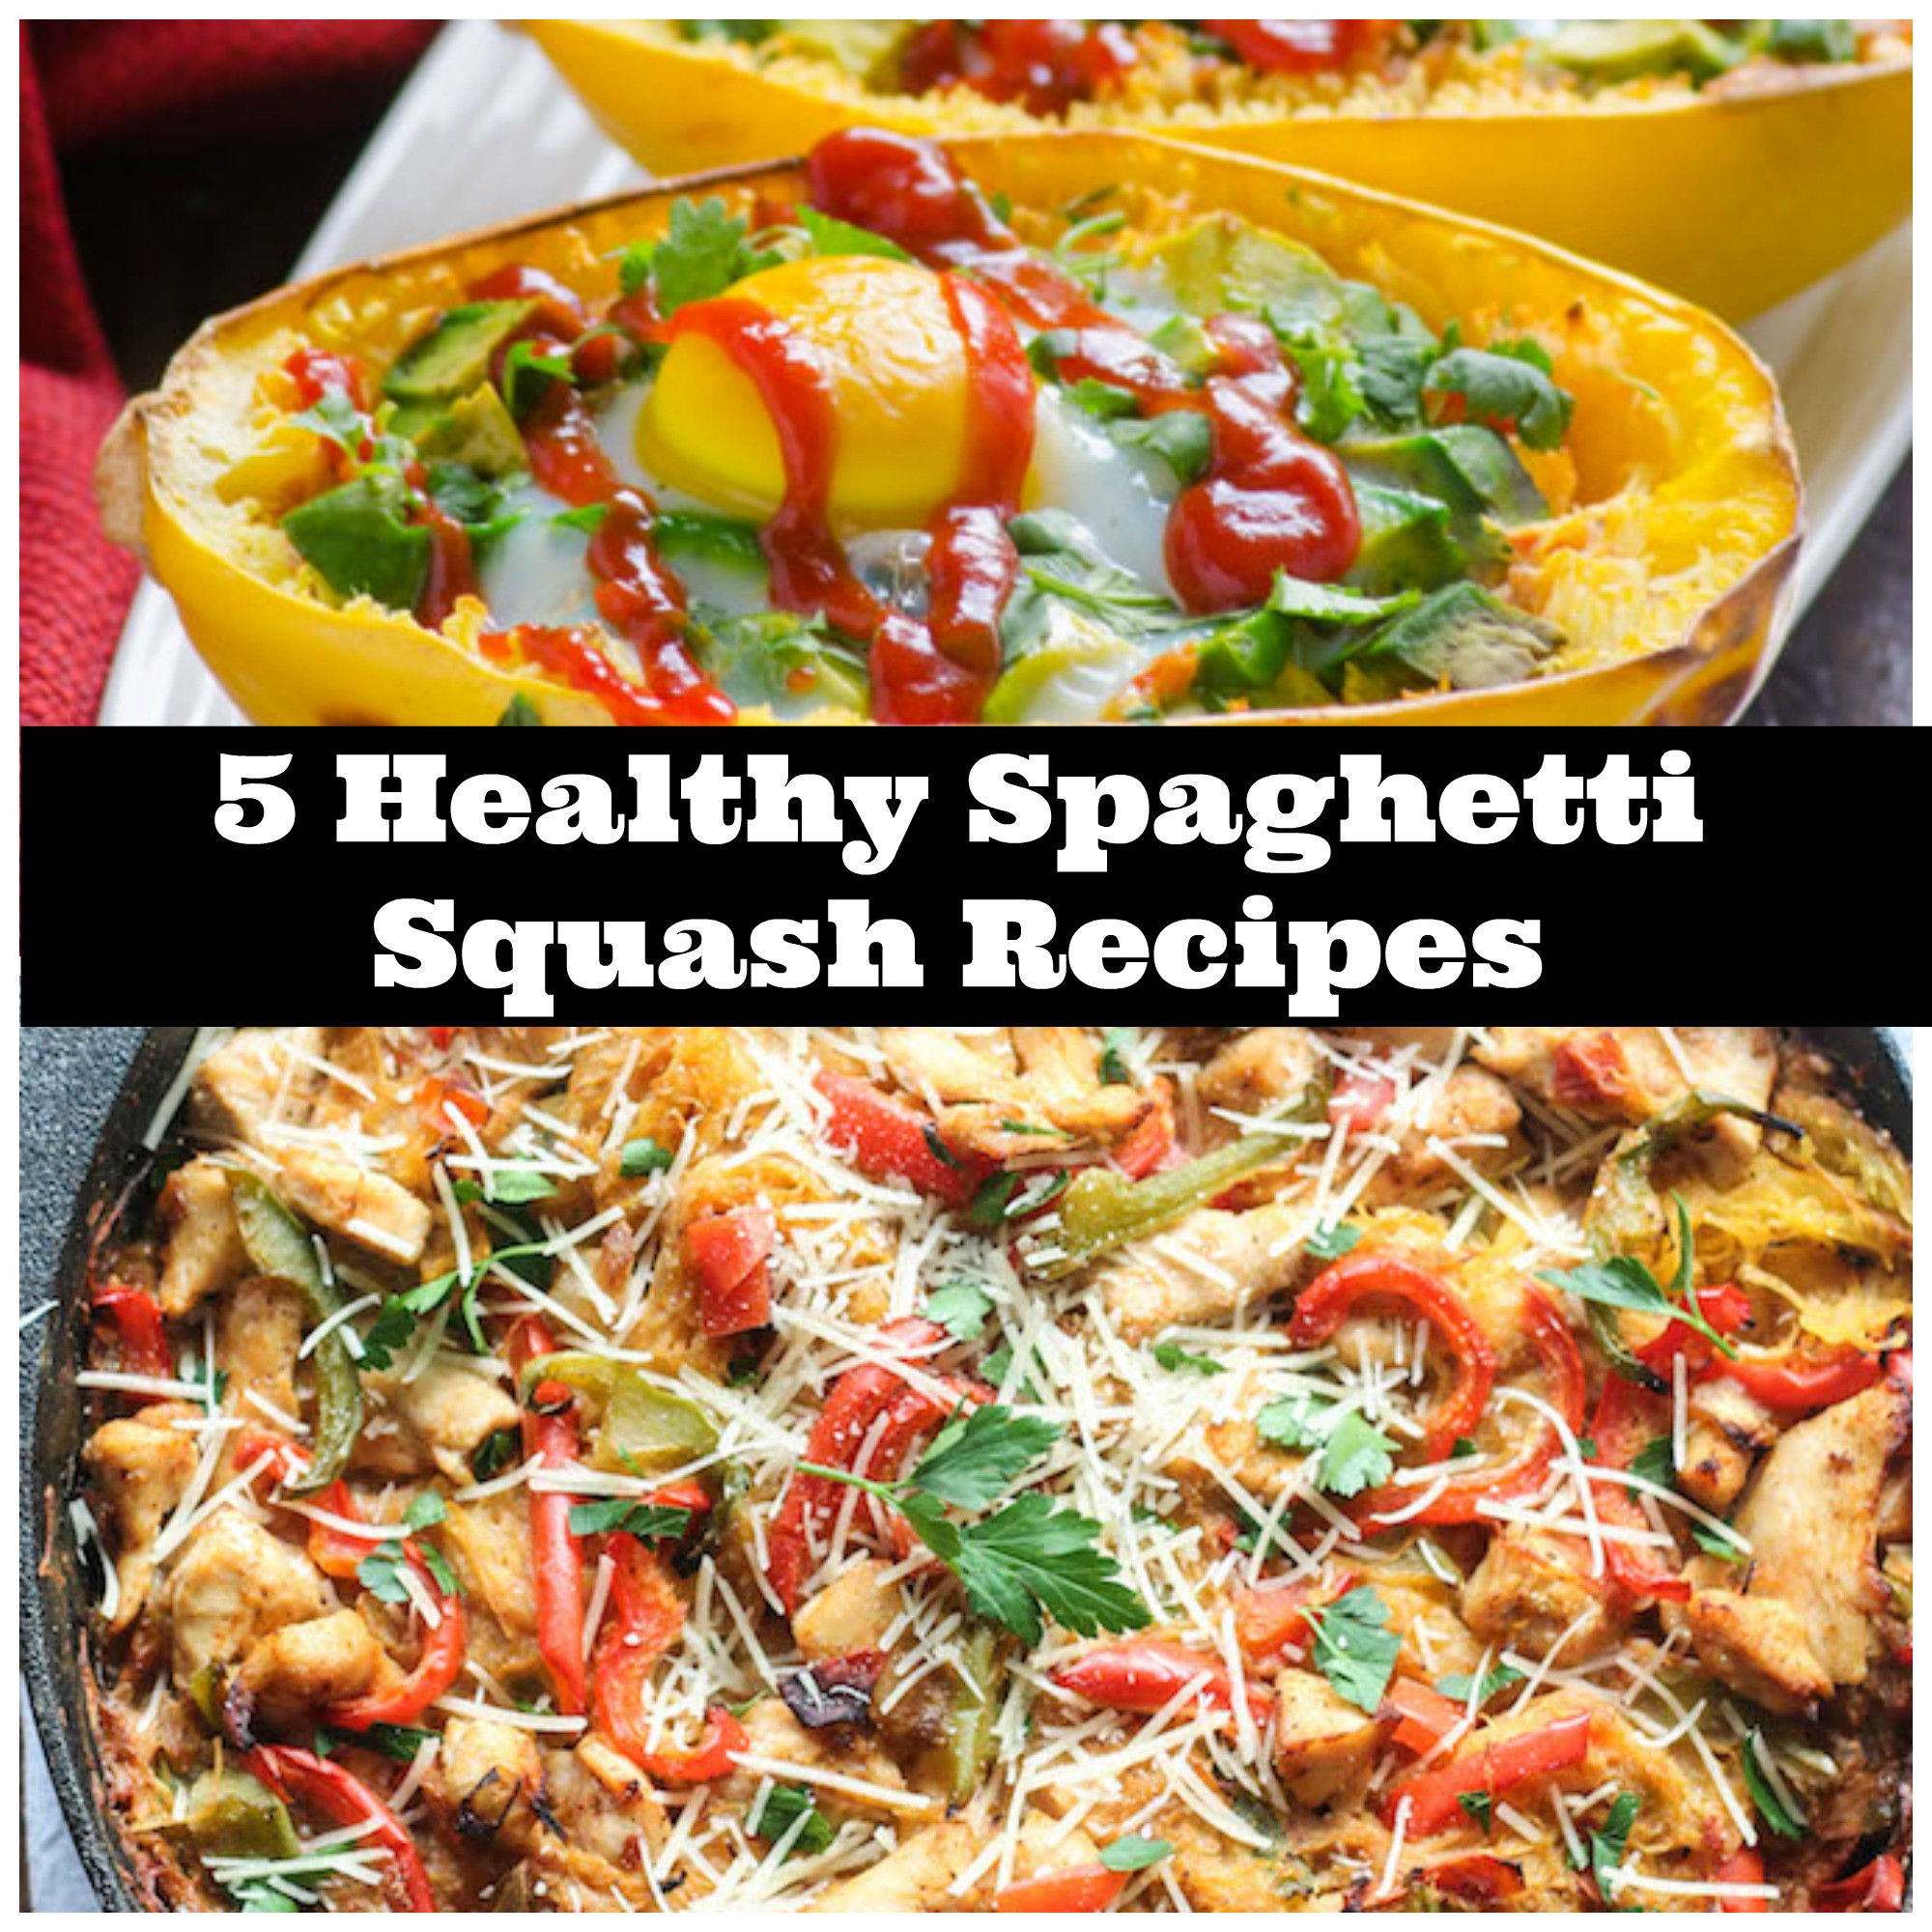 Spaghetti Squash Recipes Healthy
 5 Healthy Spaghetti Squash Recipes to Try